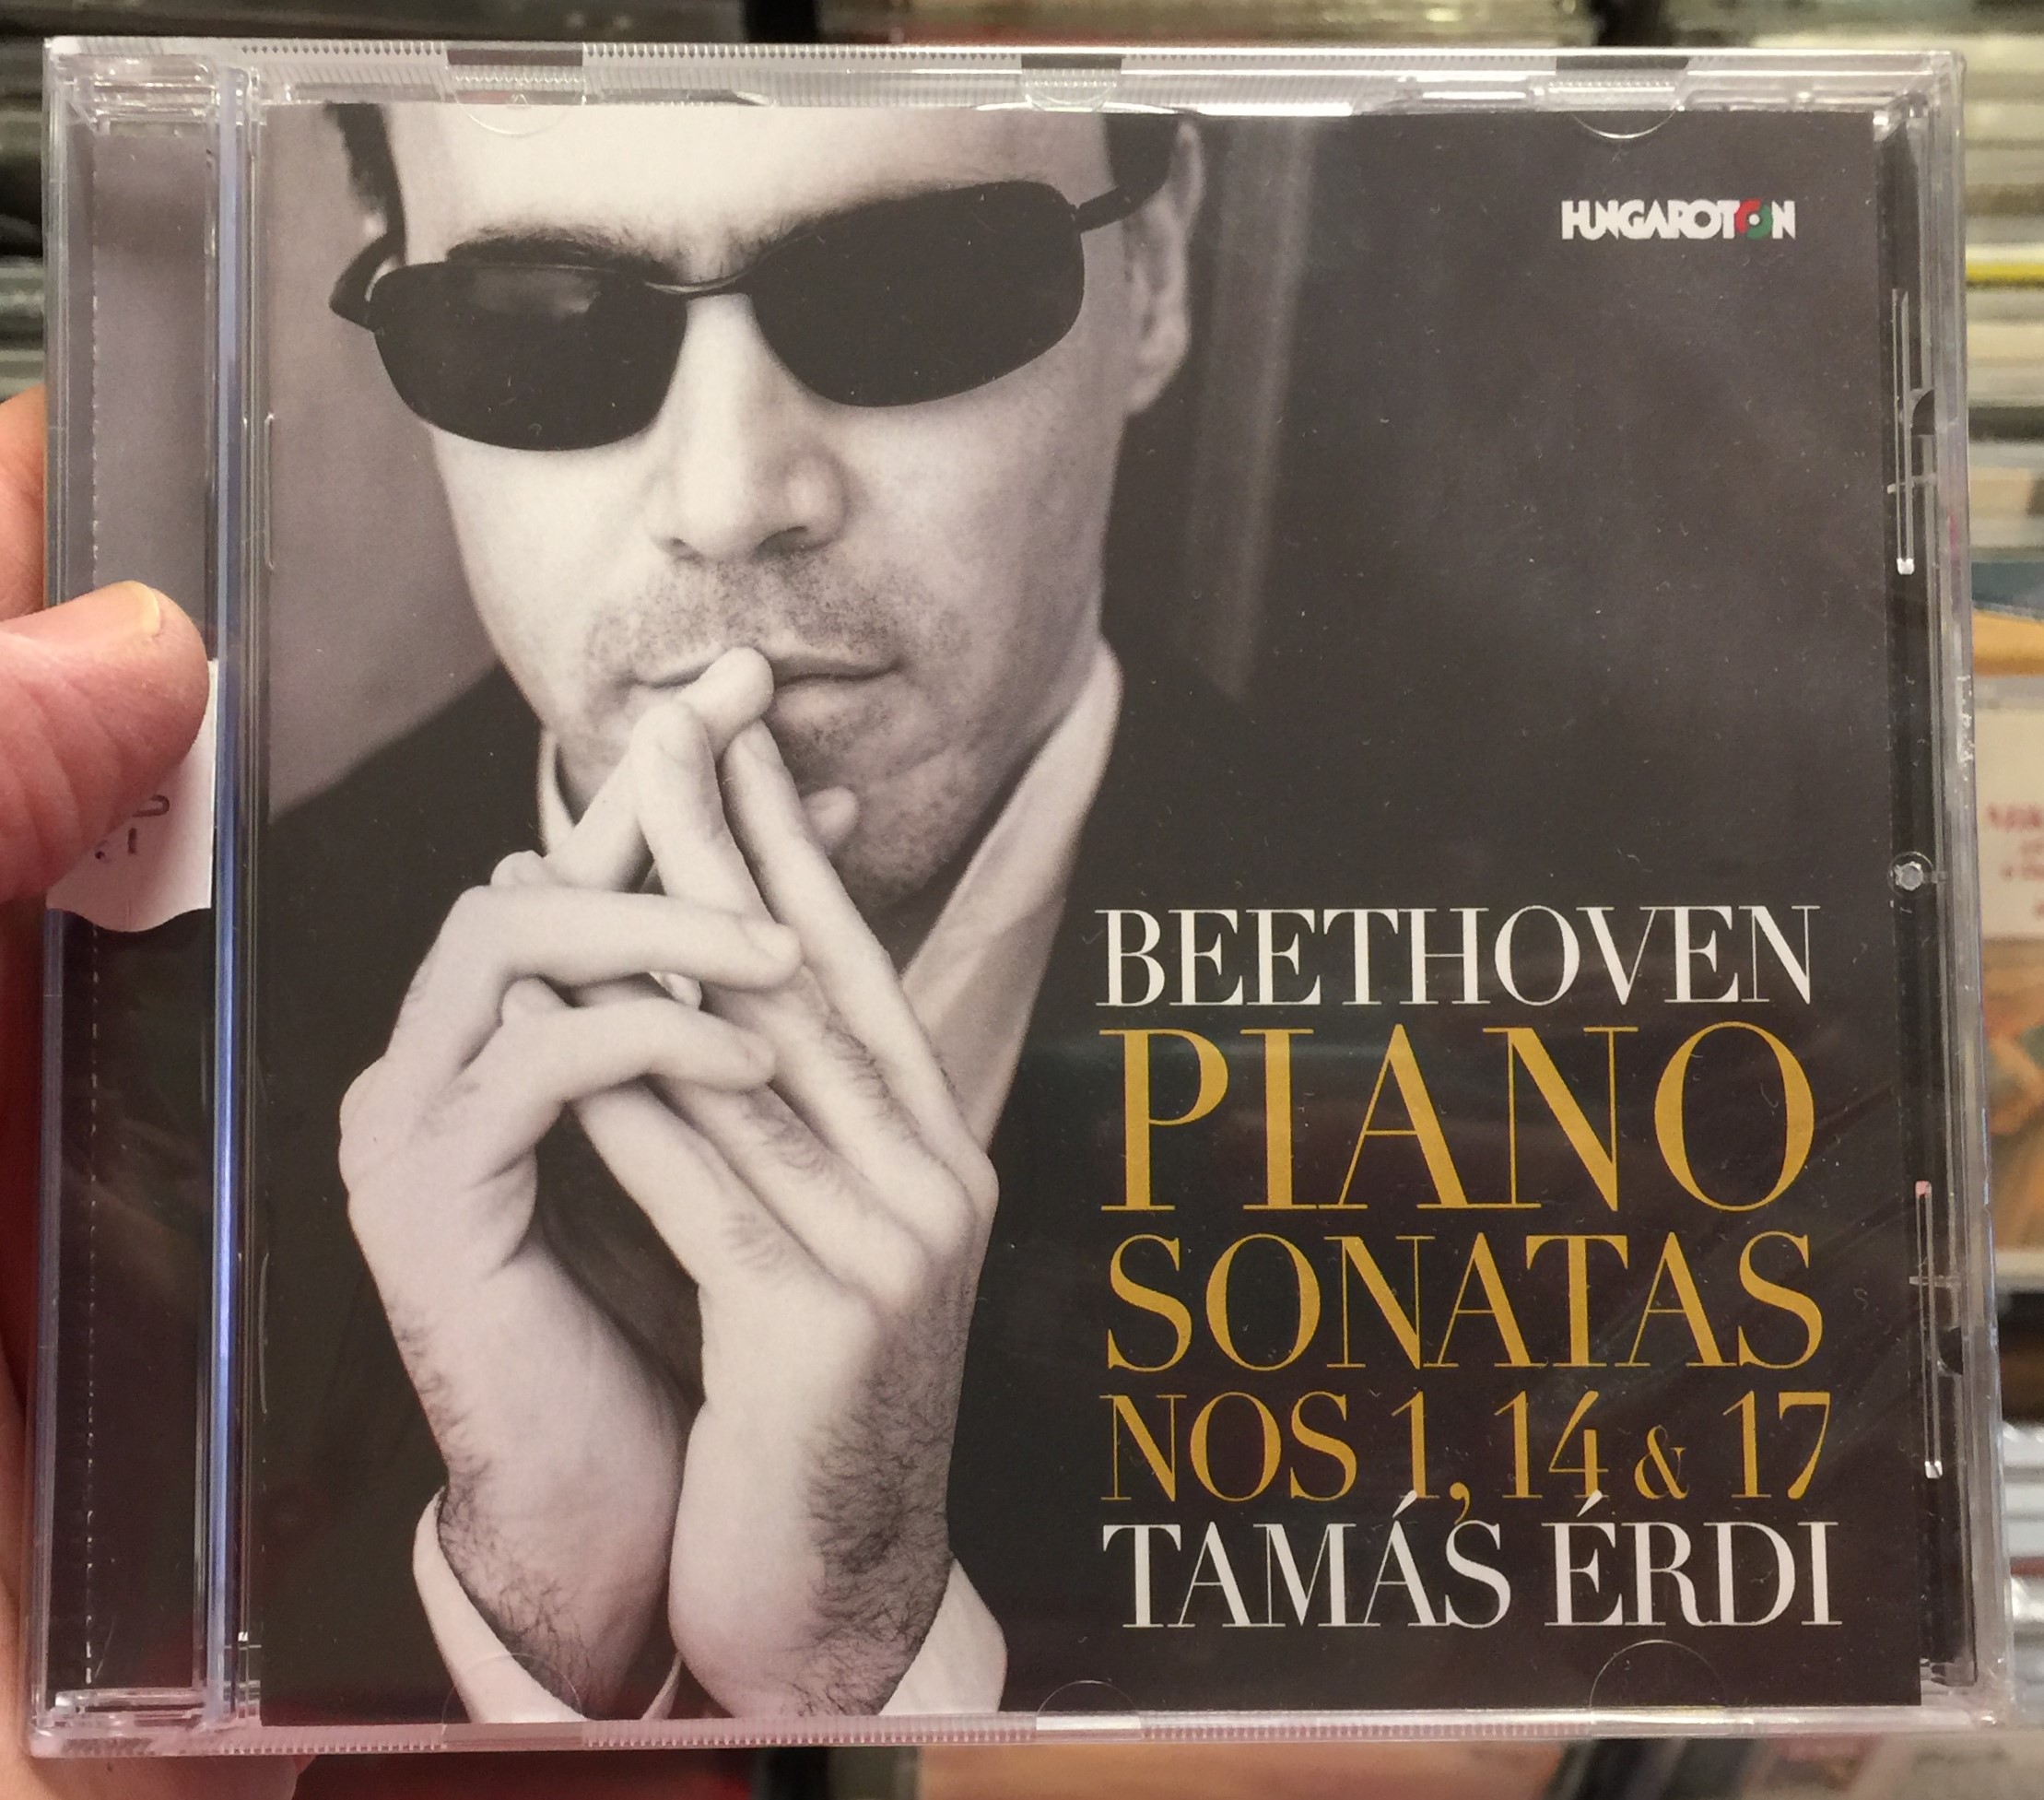 beethoven-piano-sonatas-nos-1-14-17-tamas-erdi-hungaroton-classic-audio-cd-2019-5991813282828-1-.jpg